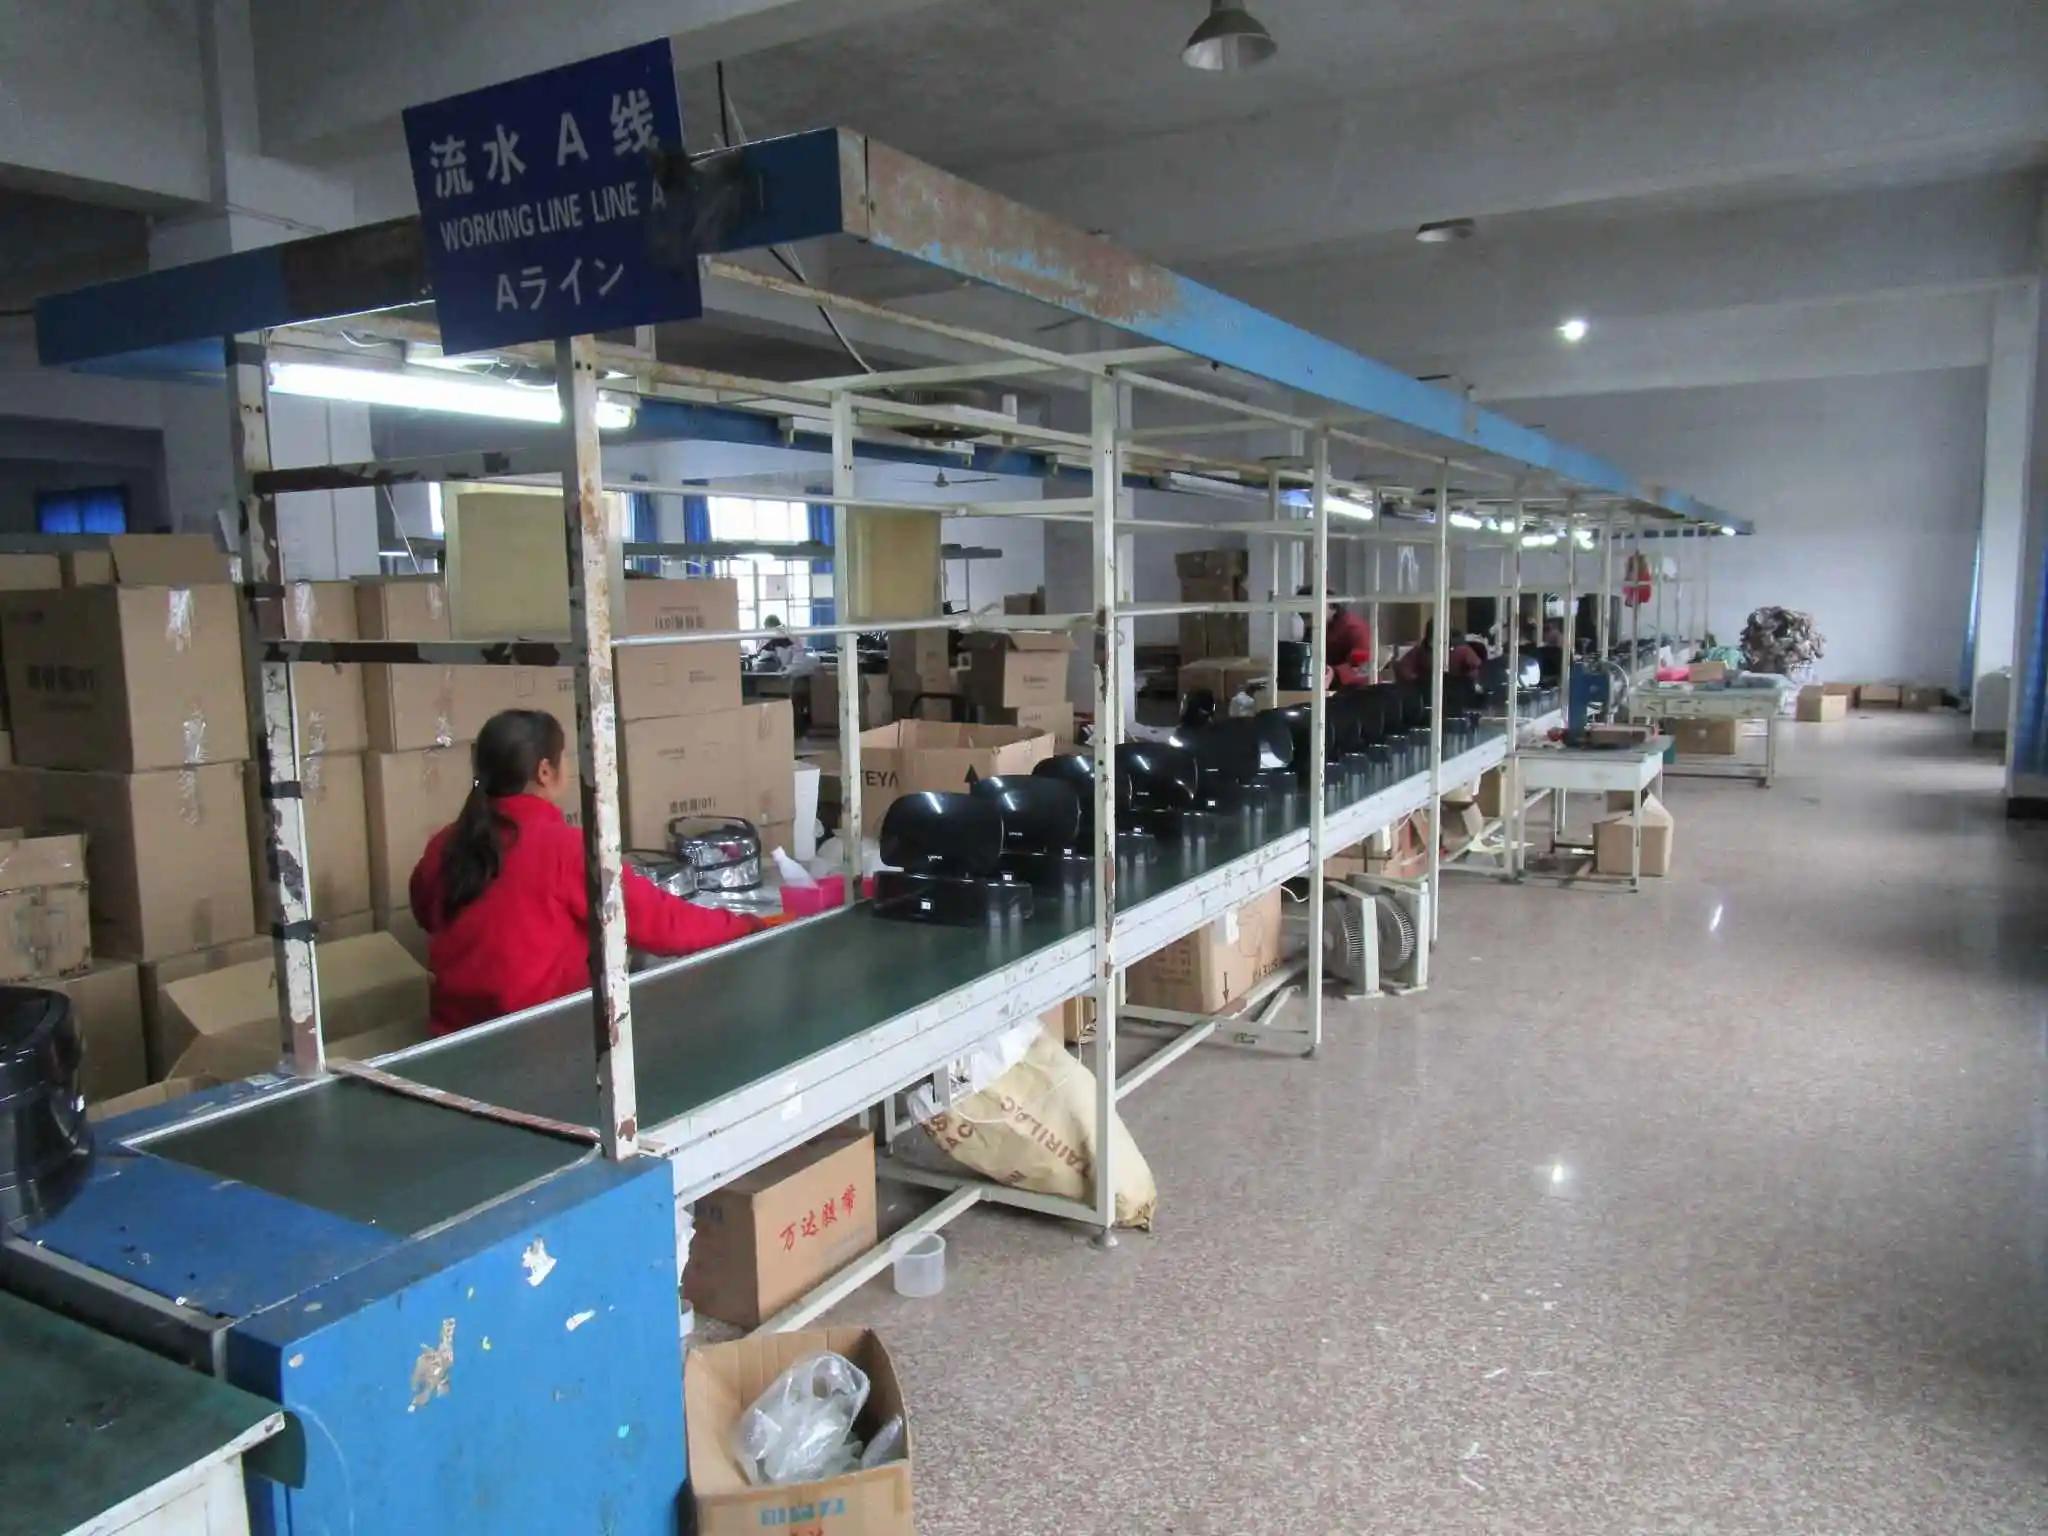 Ningbo Sisuo Electrical Appliance Co., Ltd.